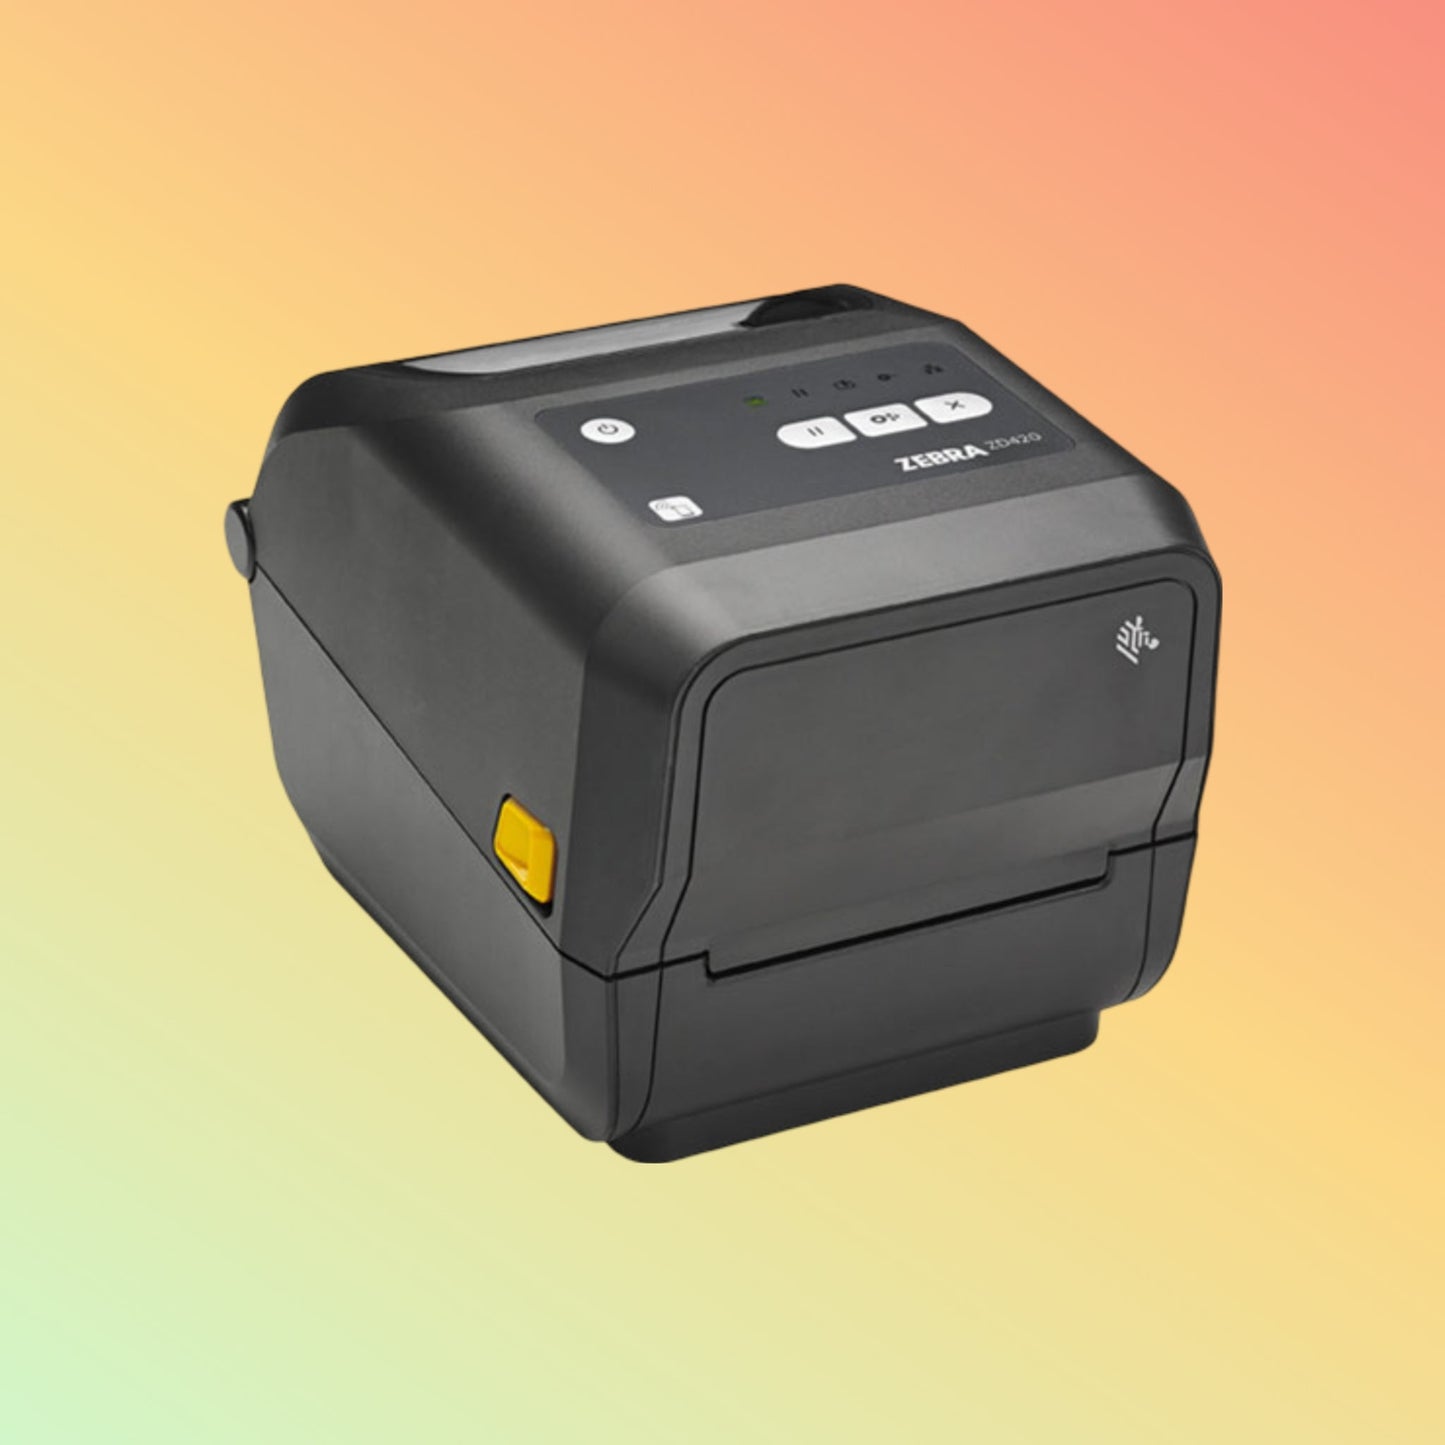 Alt="Zebra ZD420 4-inch desktop printer configured for thermal label printing, showcasing ease of use."